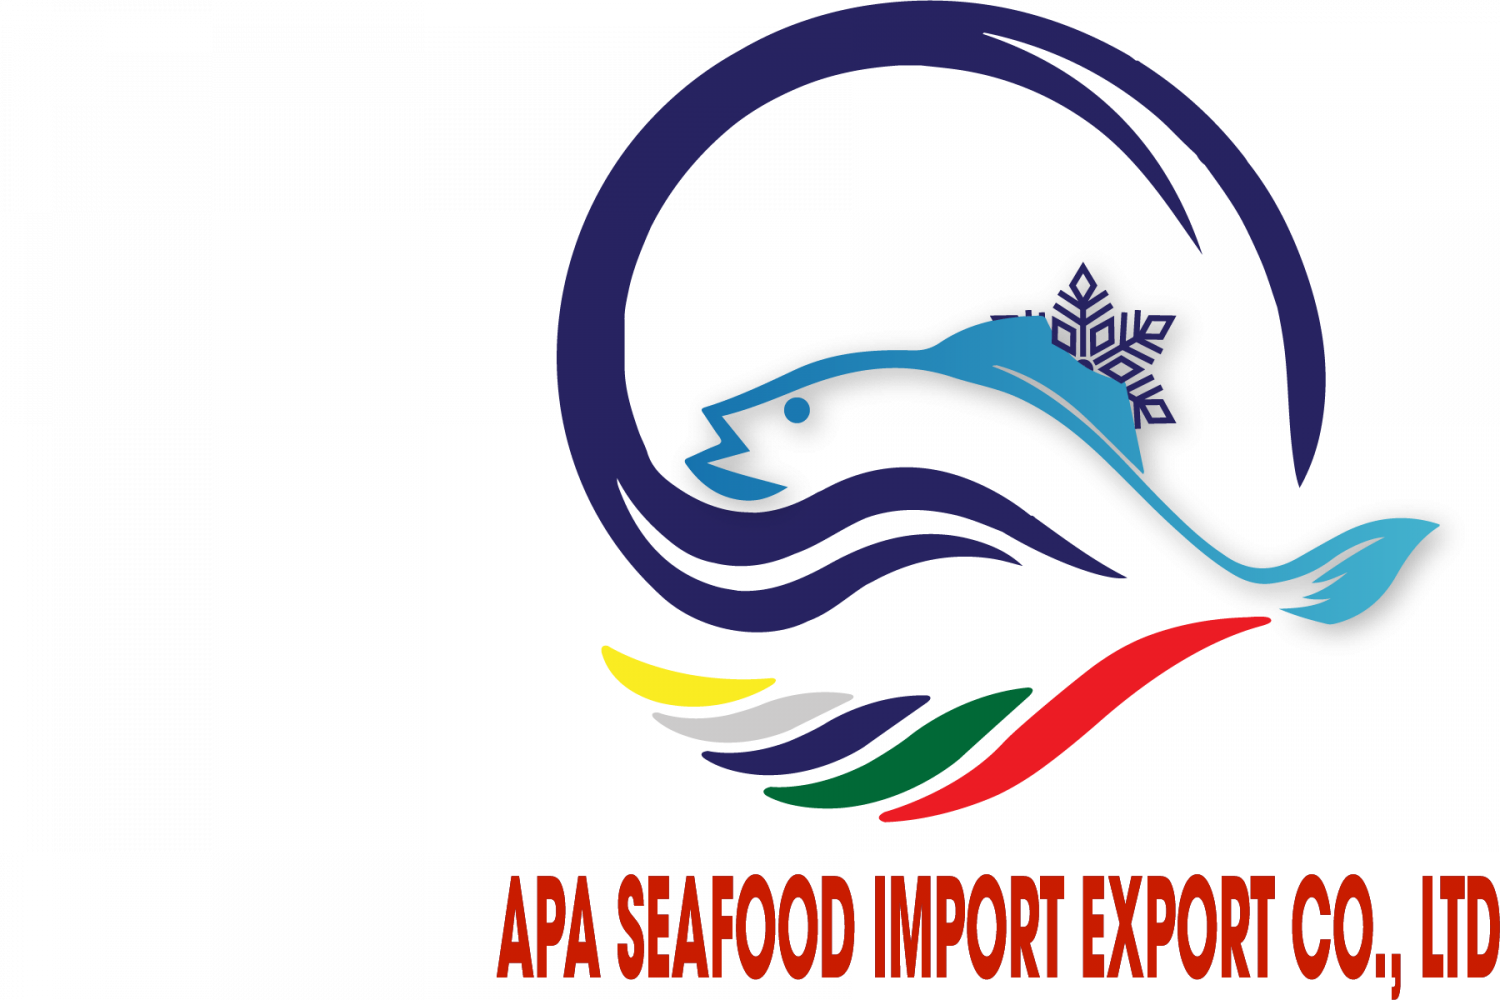 APA SEAFOOD IMPORT EXPORT CO., LTD